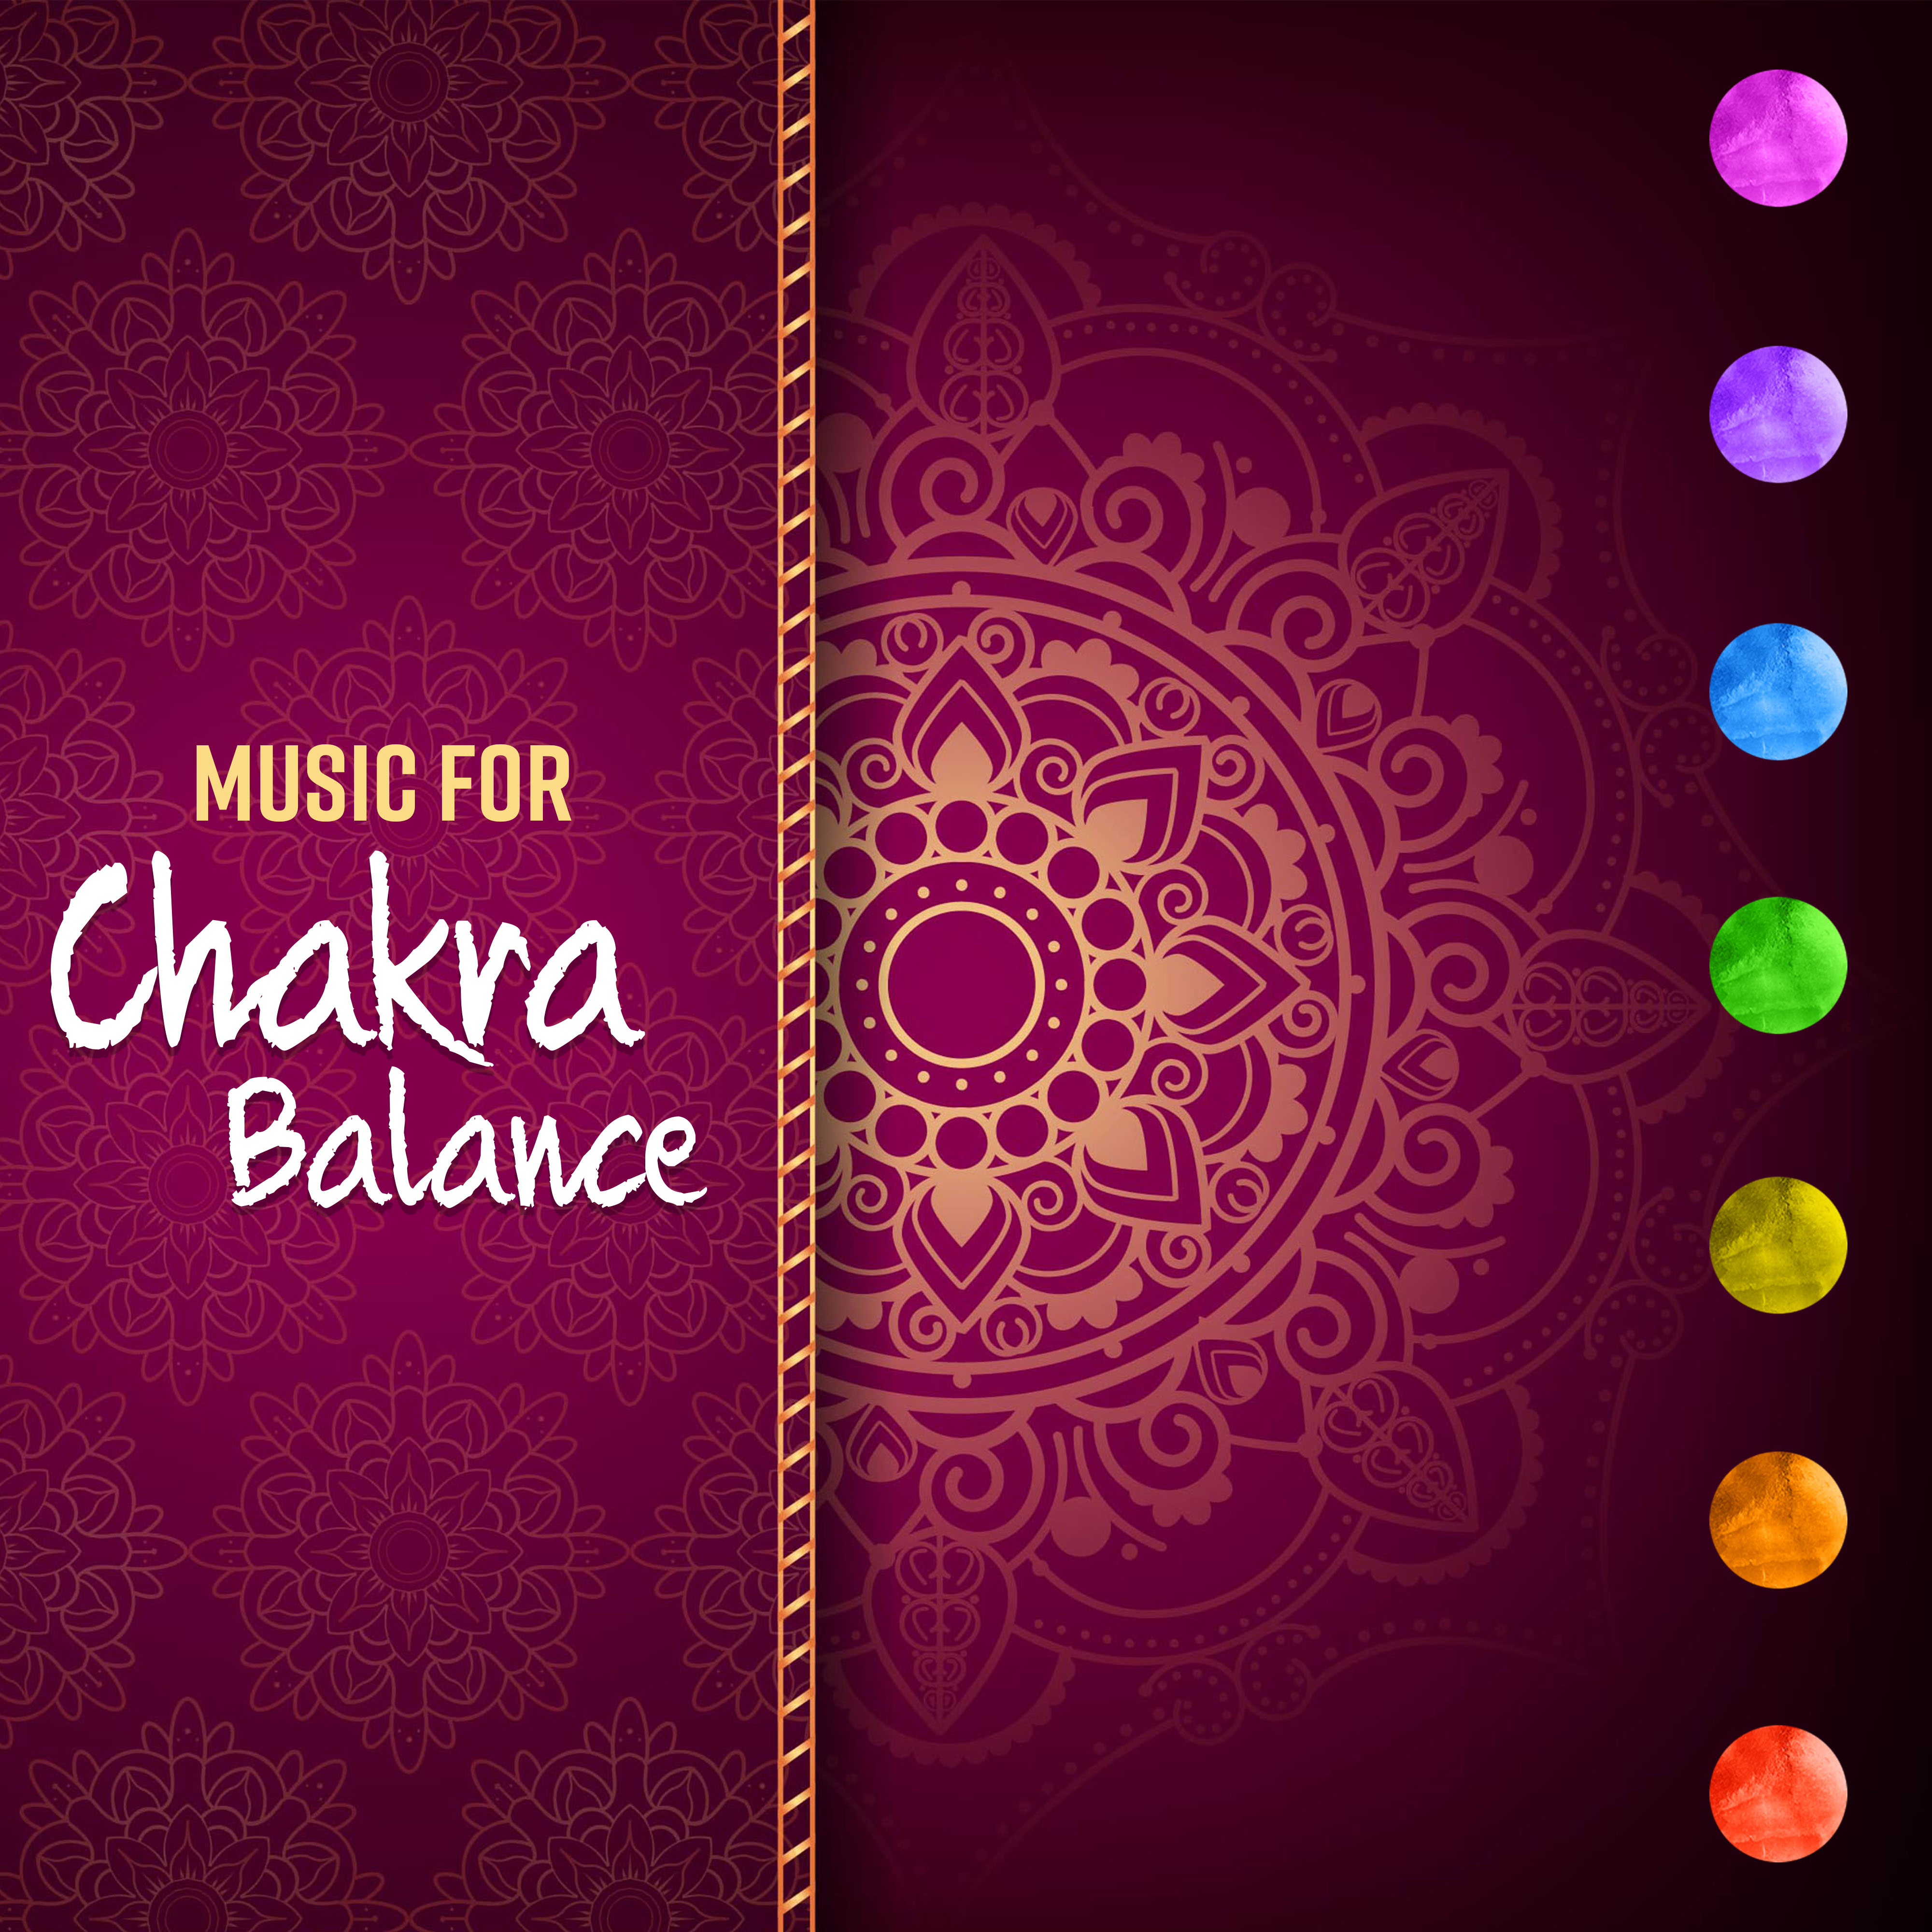 Music for Chakra Balance